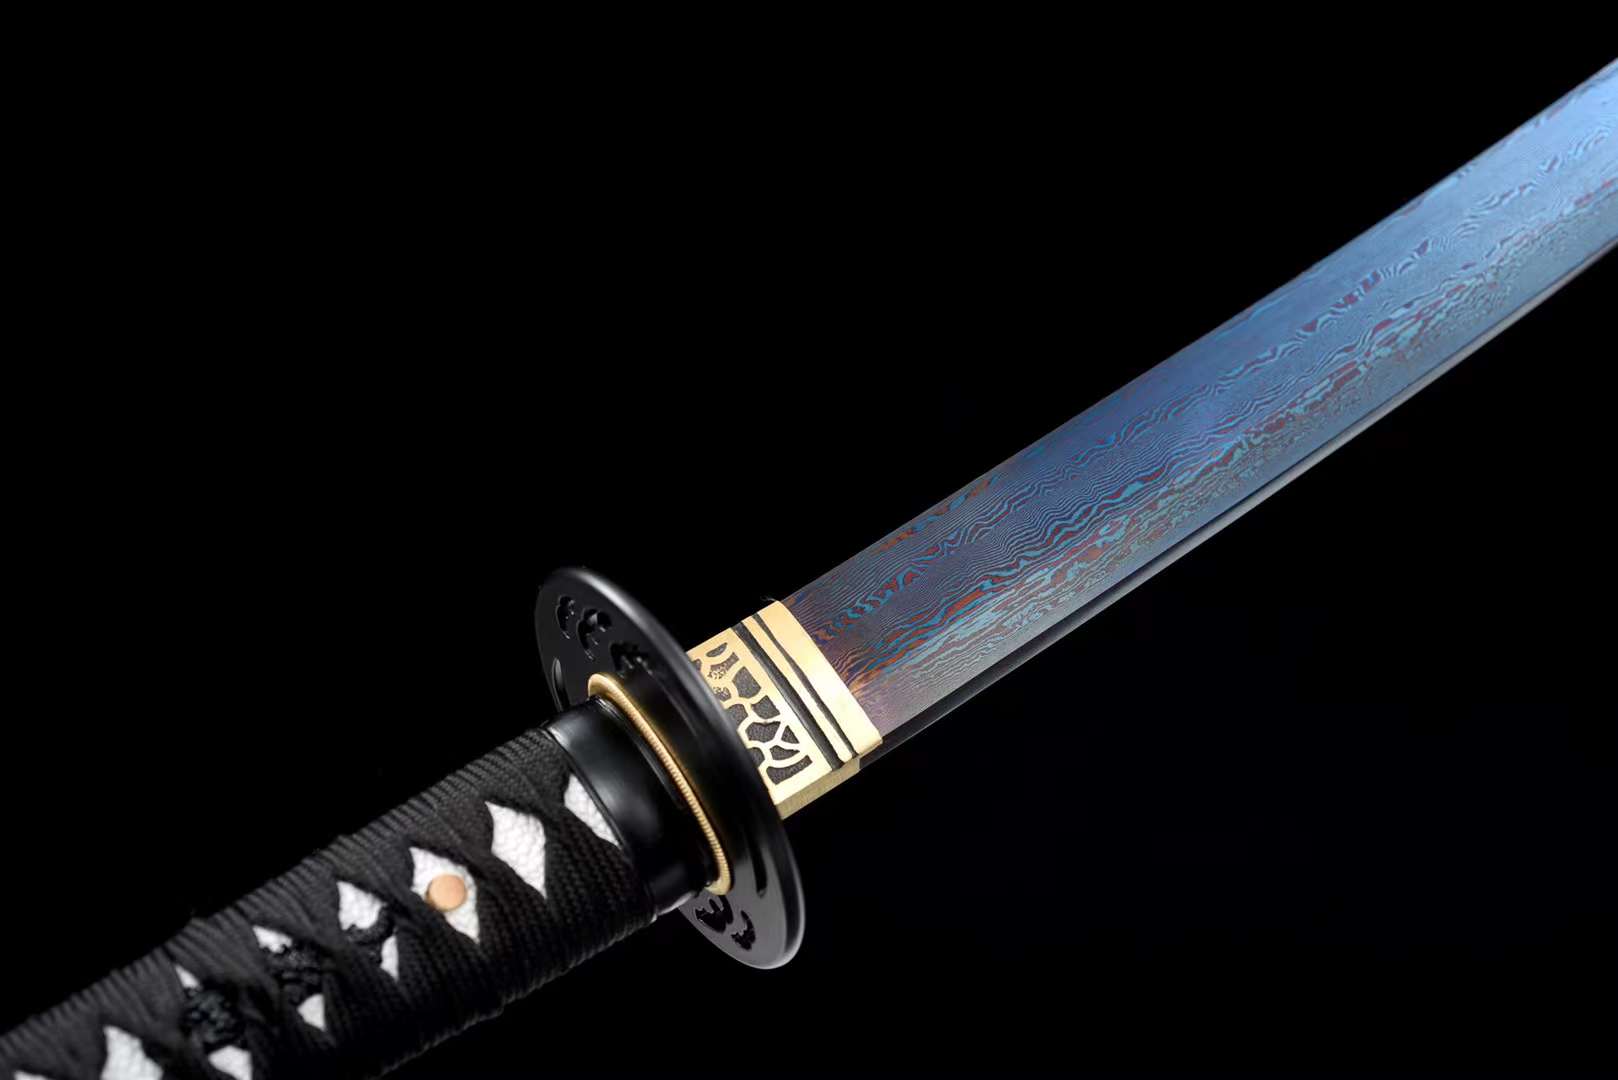 The Shizukana Lan Handmade Reverse Blade Katana Pattern Steel